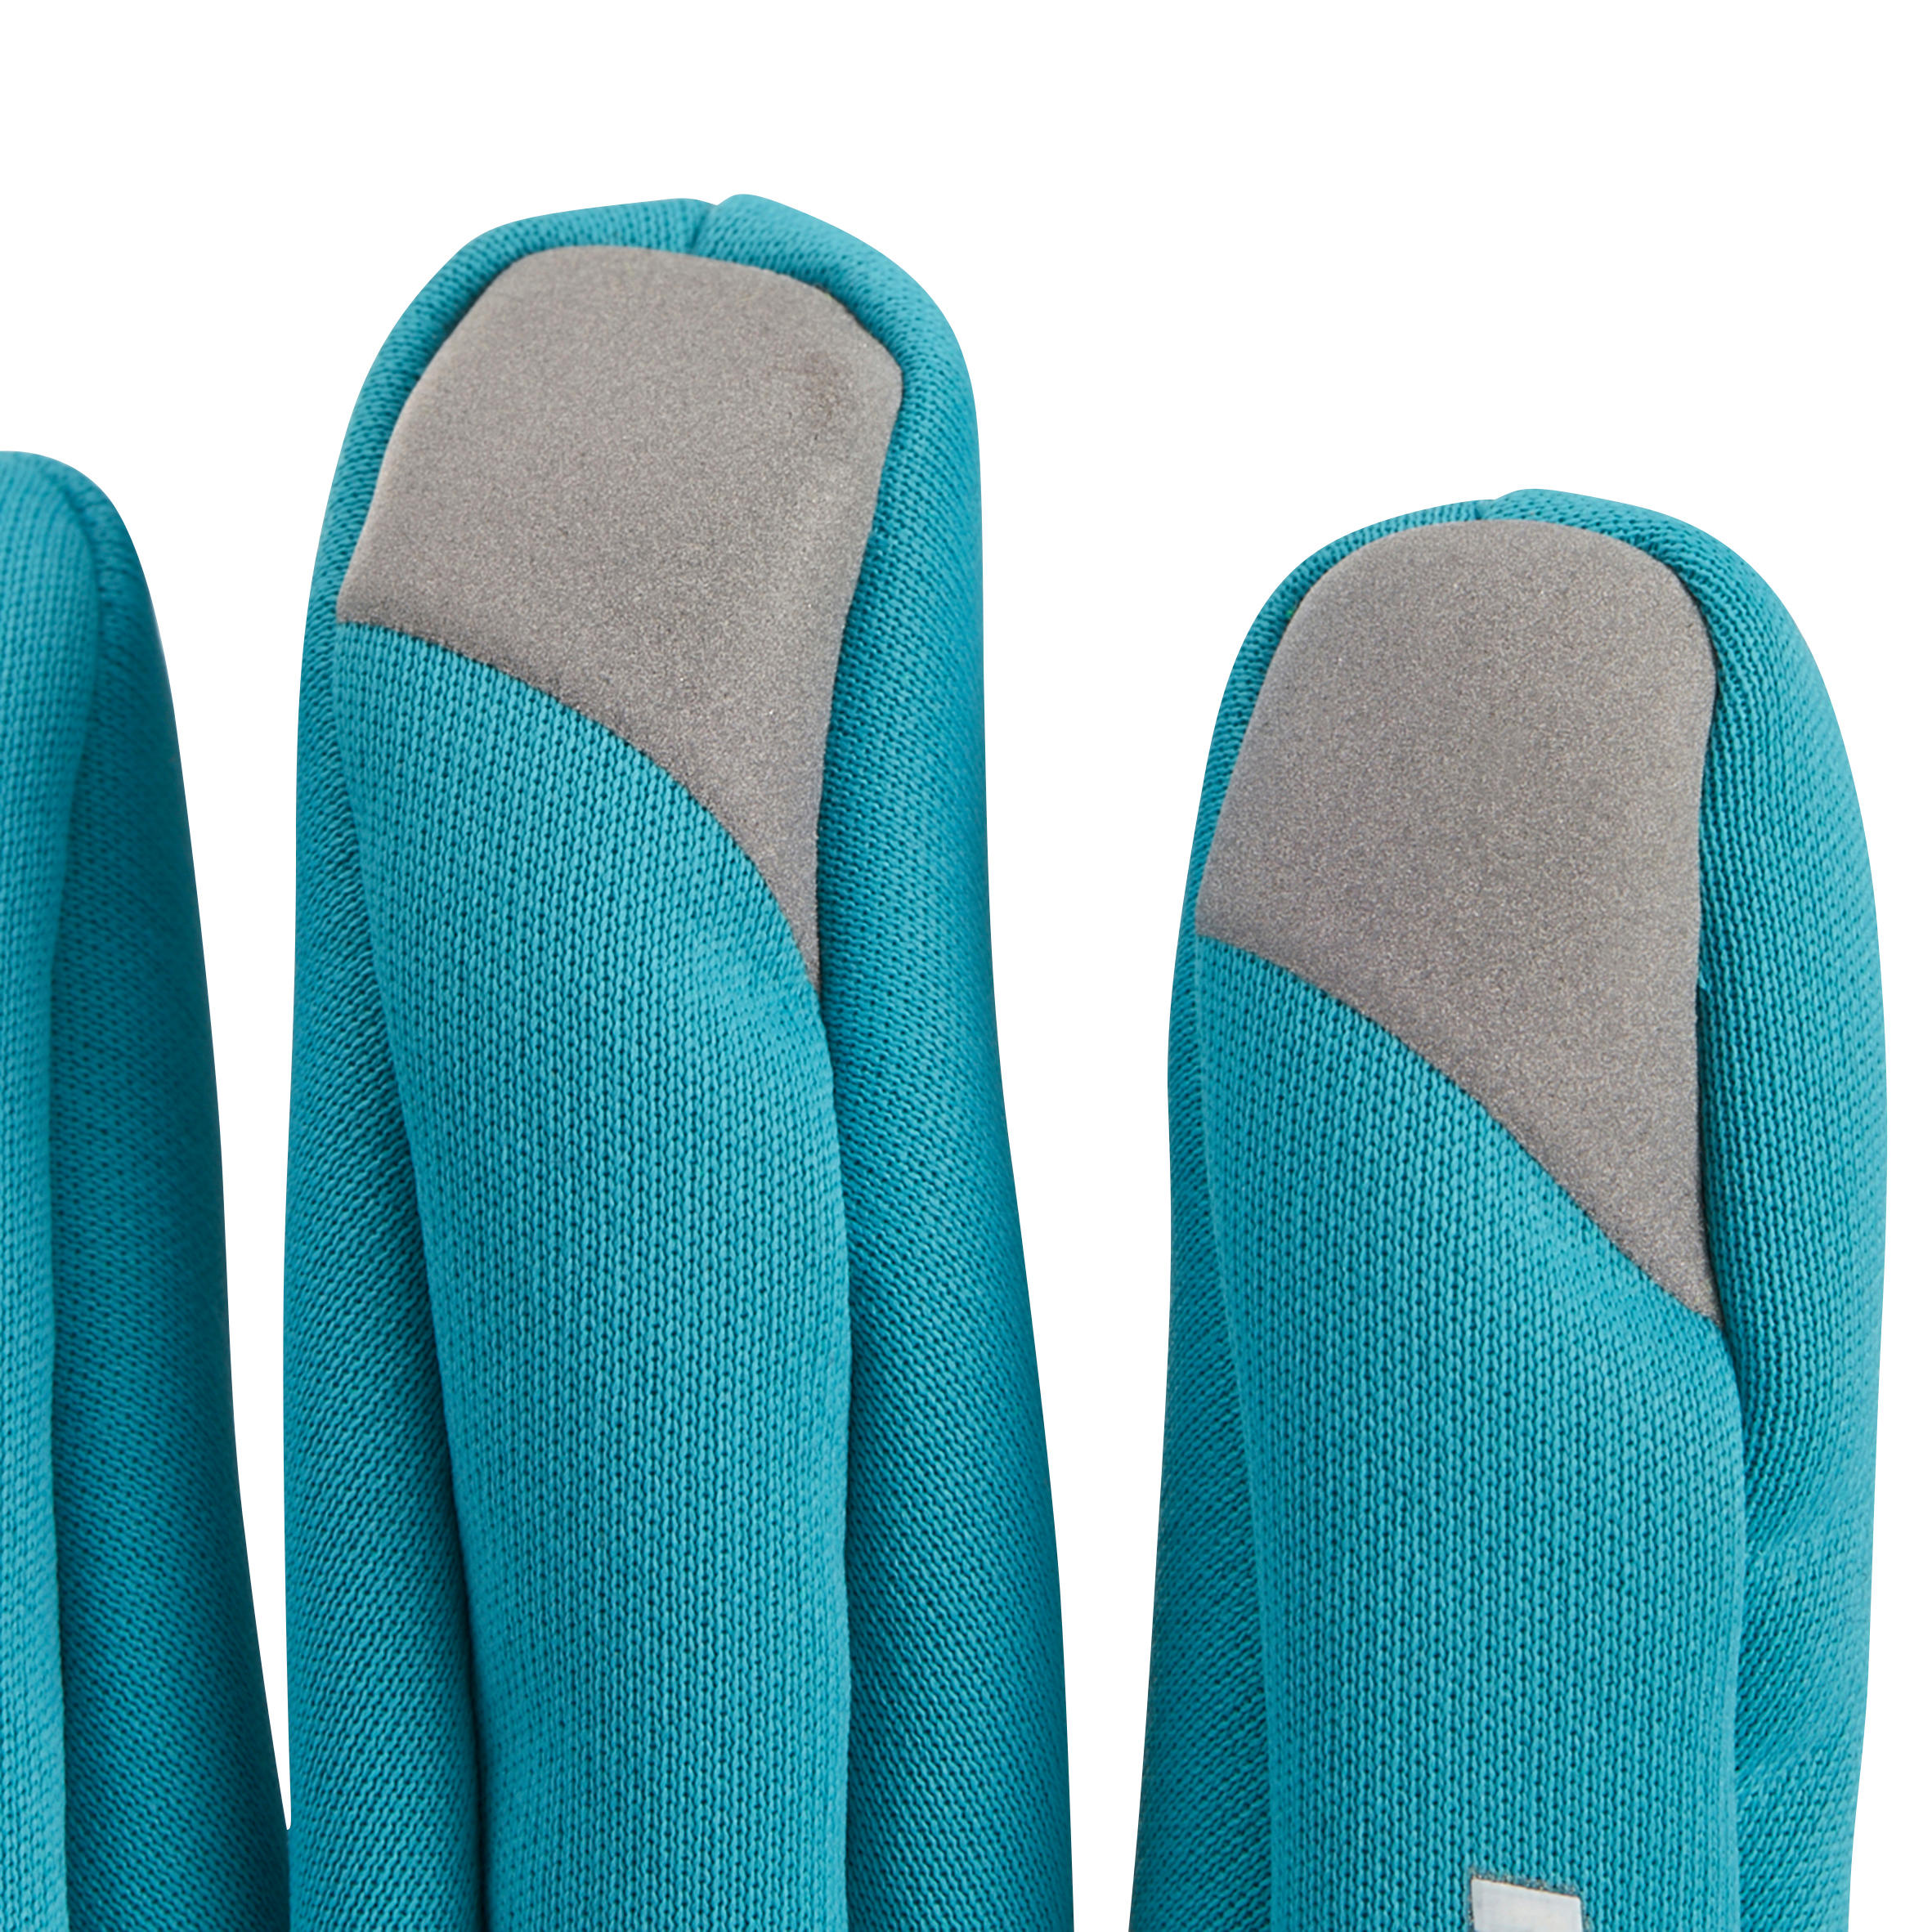 500 Women's Cycling Winter Gloves - Blue 4/11